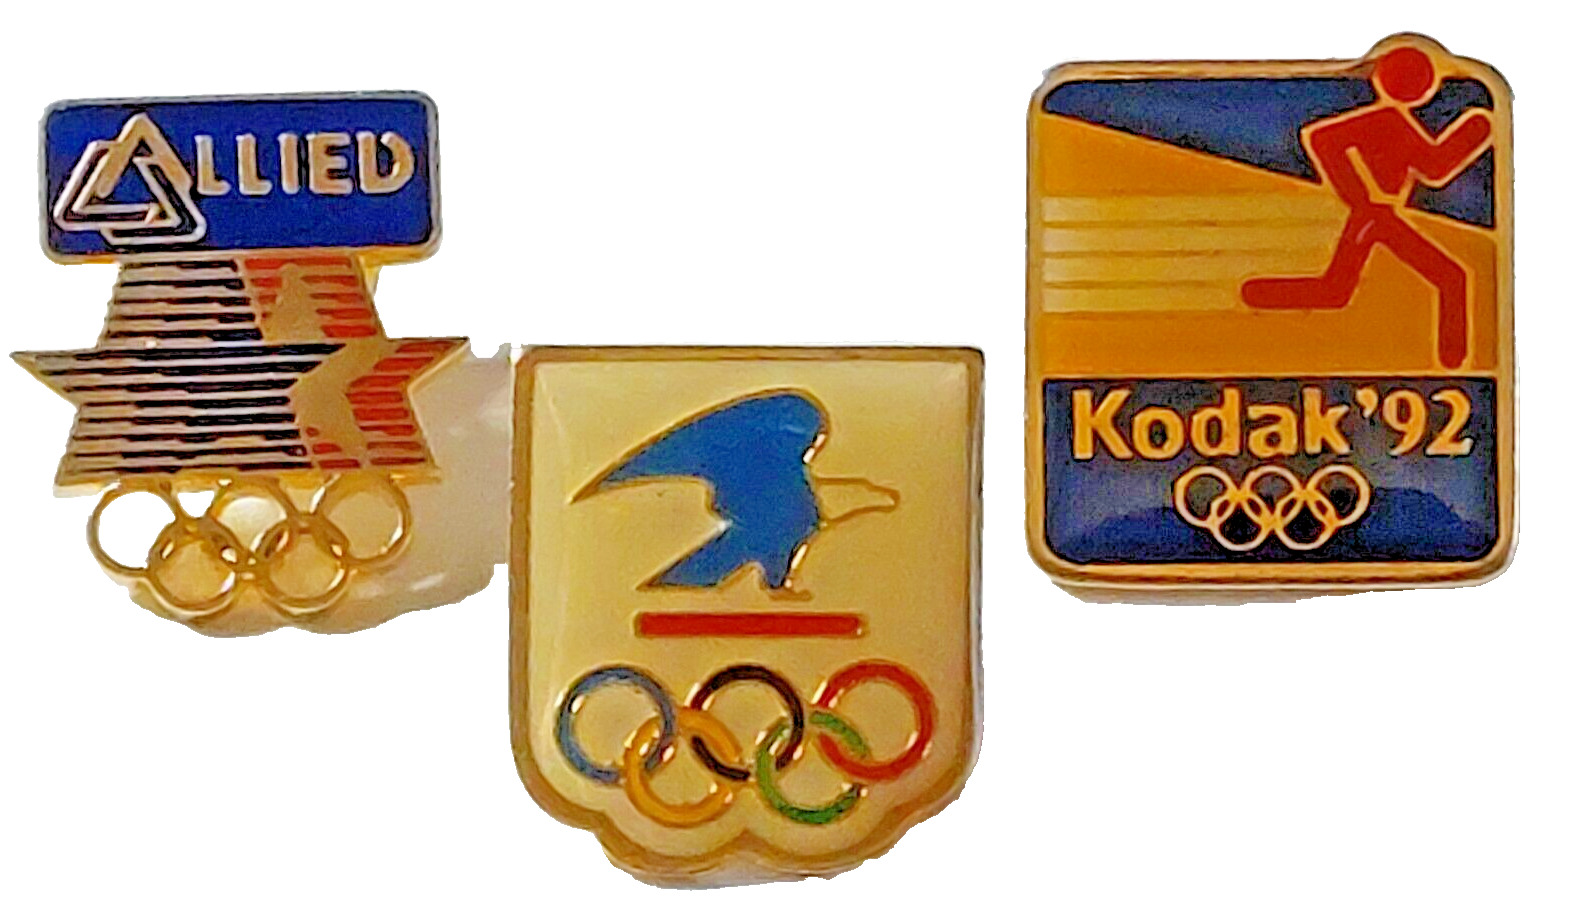 Olympics USPS/Allied/Kodak Lapel Pins Lot of 3